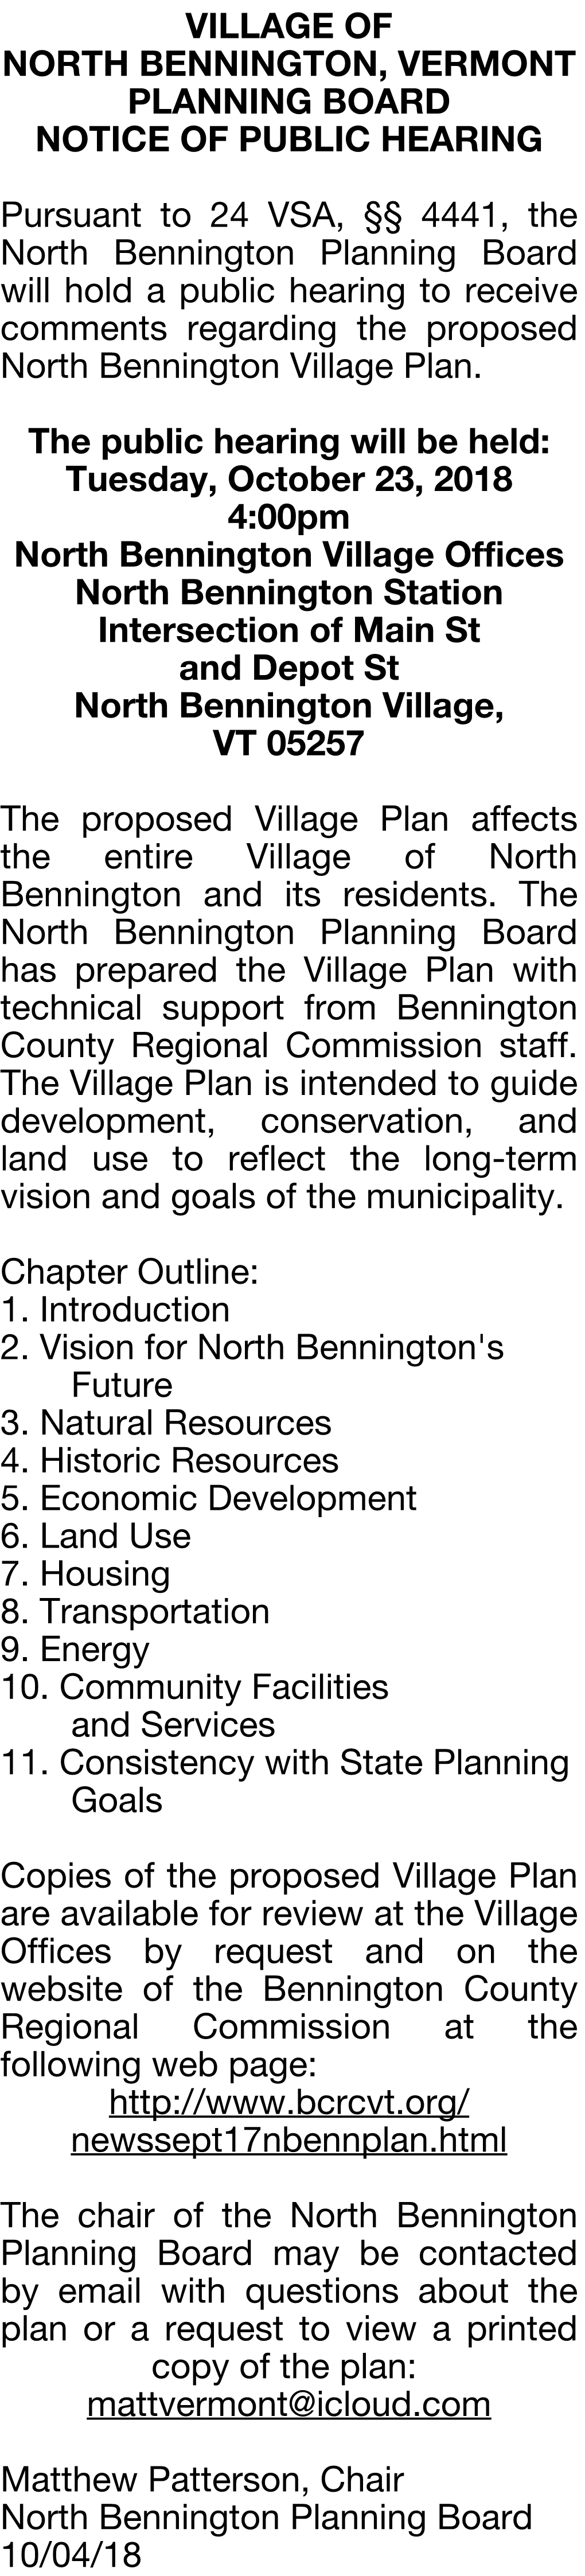 Village of North Bennington, Vermont Planning Board Notice of Public Hearing